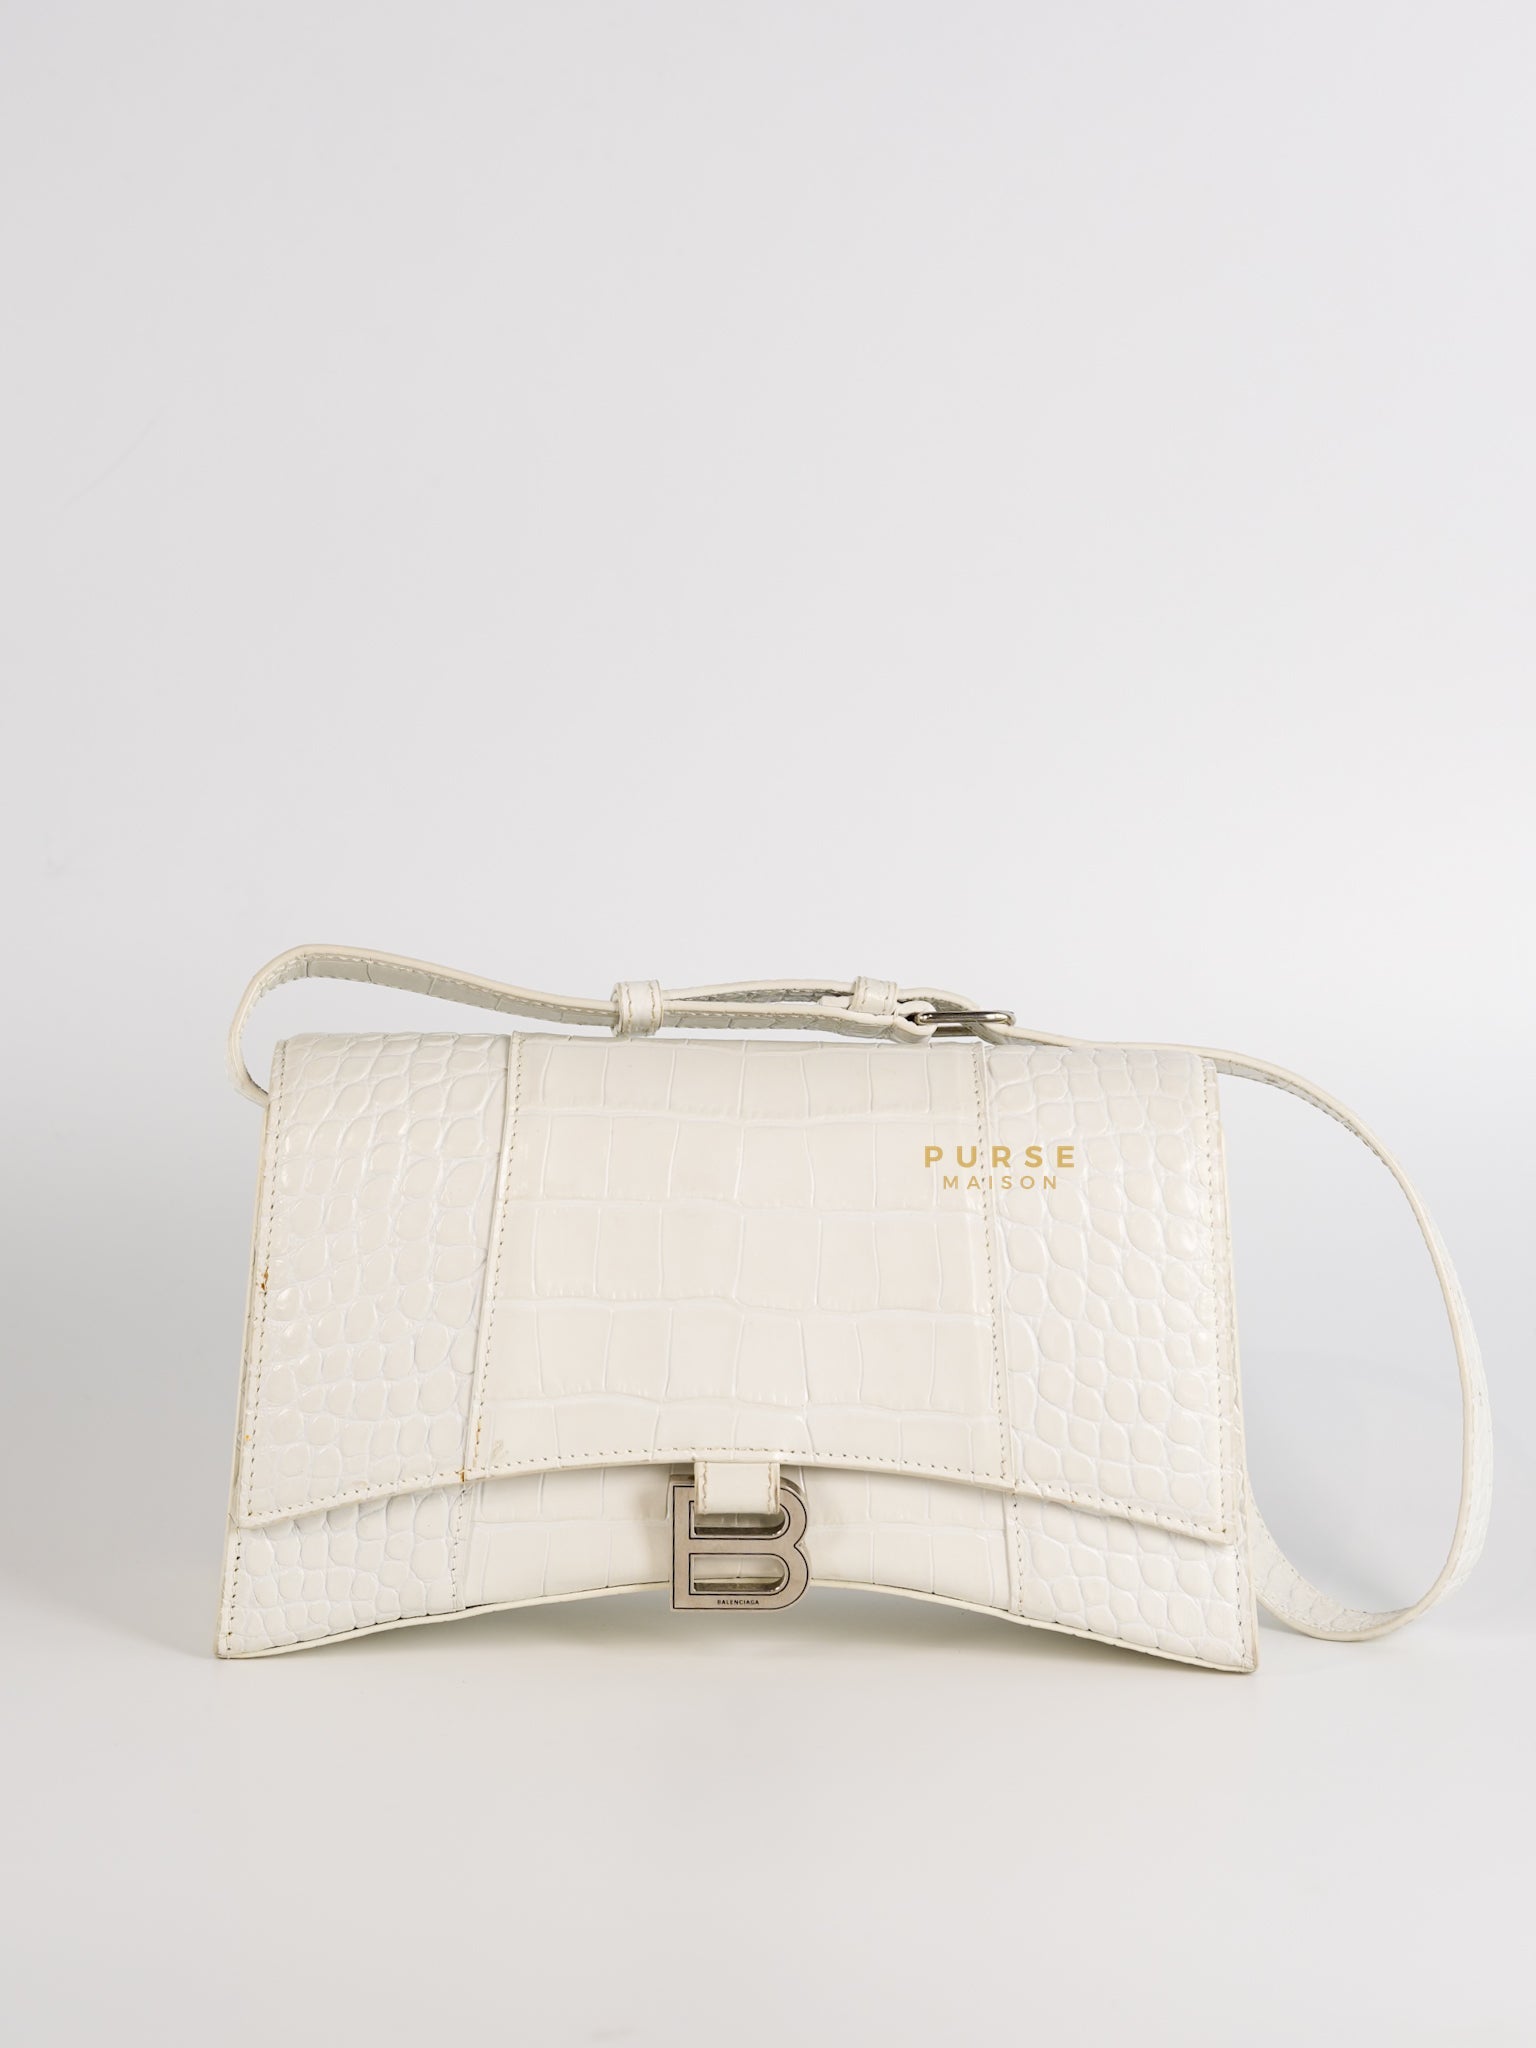 Balenciaga White Hourglass Croc Embossed Bag | Purse Maison Luxury Bags Shop